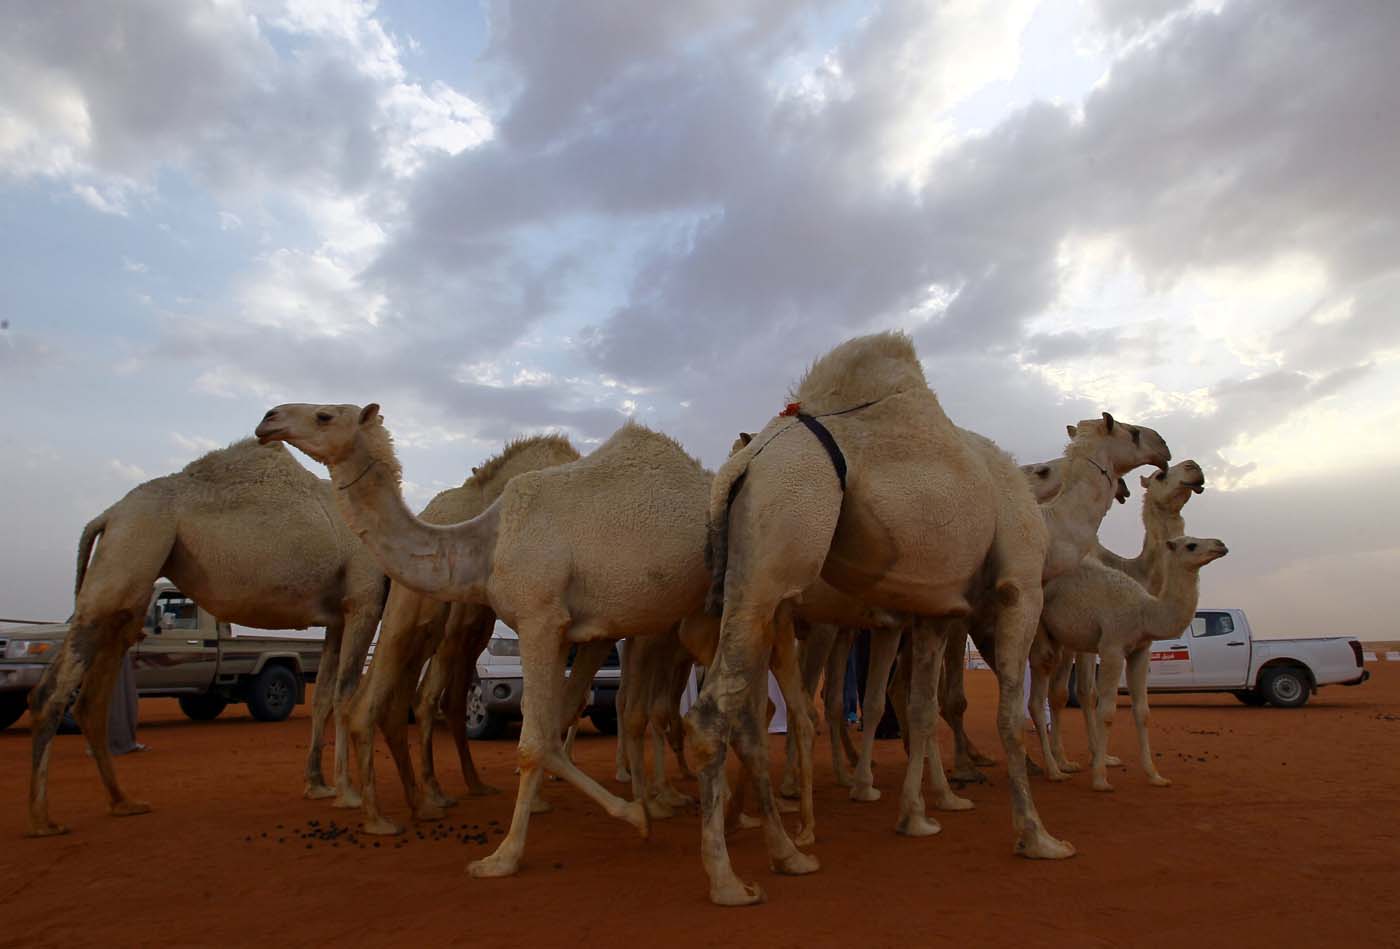 Concurso de belleza en Arabia Saudita, pero de camellos (fotos)